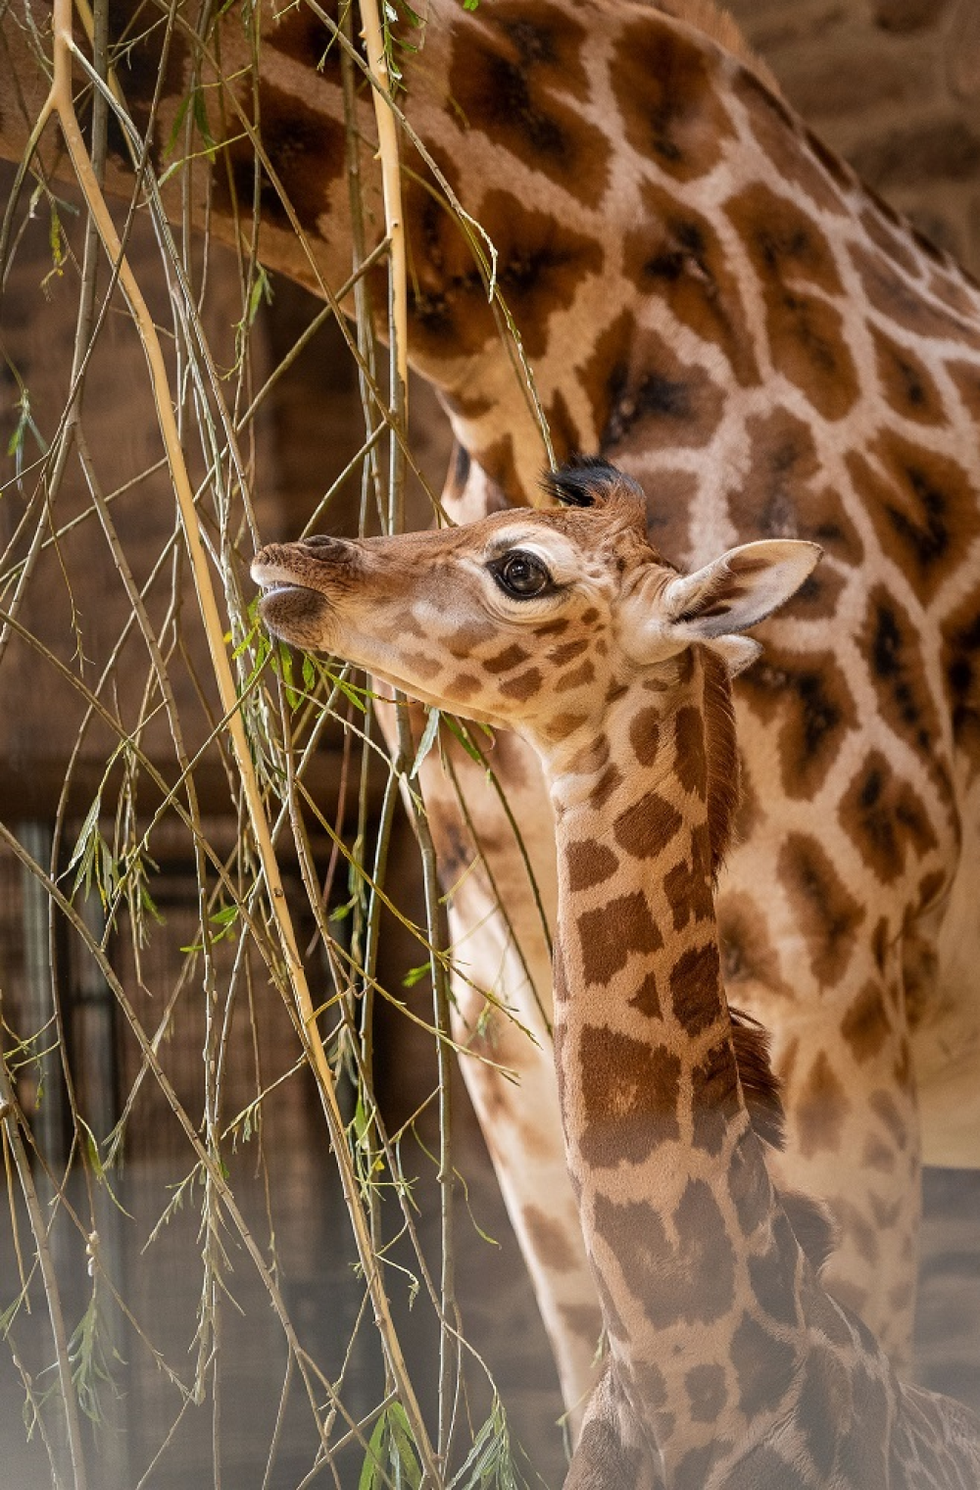 Newborn giraffe arrives with a bump at zoo